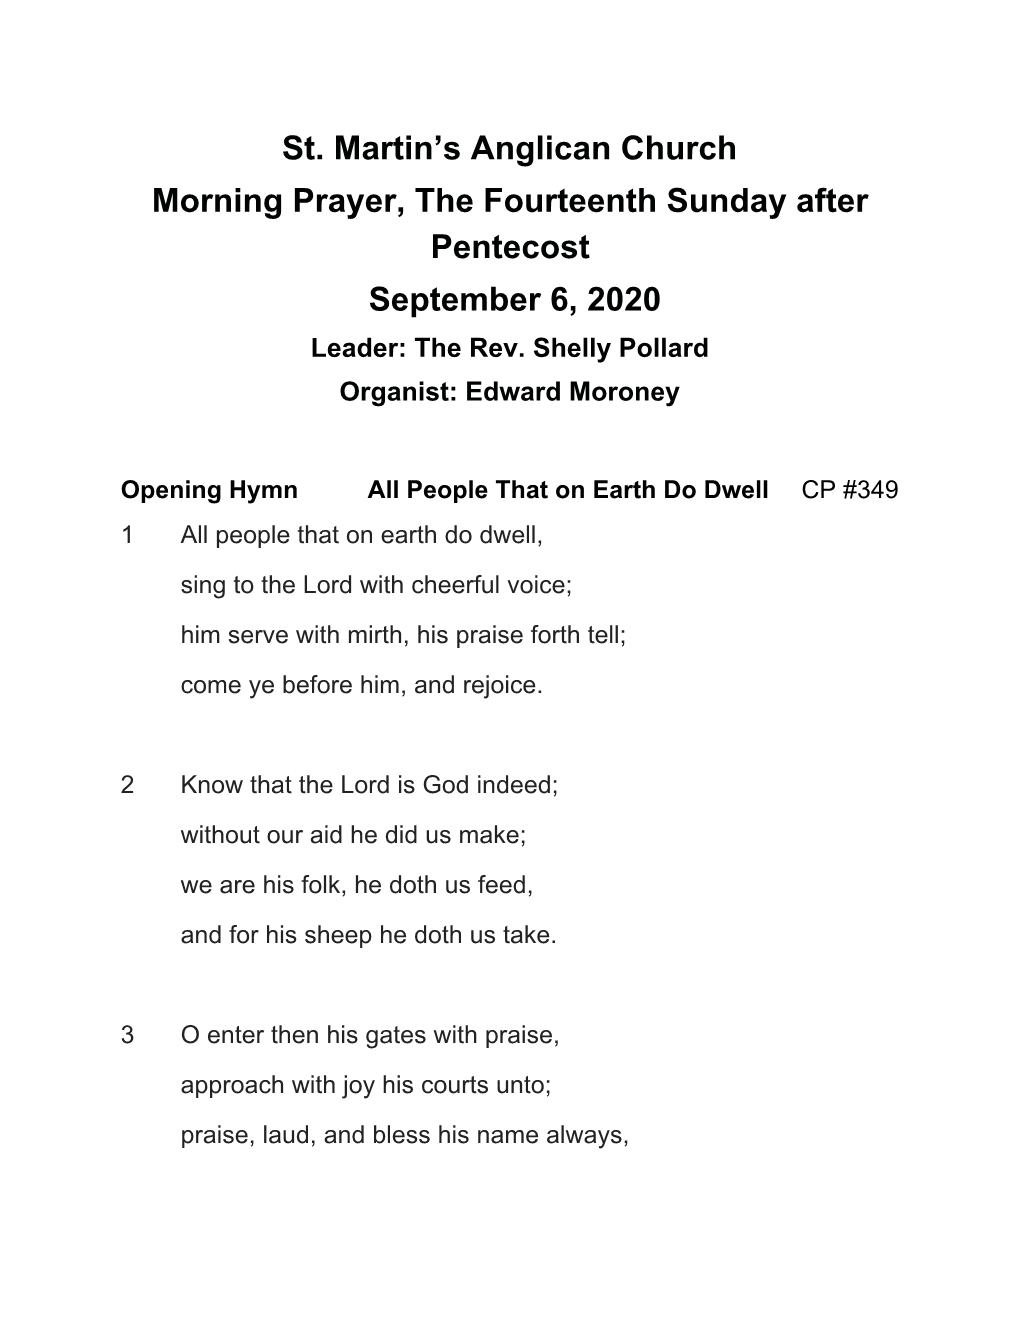 St. Martin's Anglican Church Morning Prayer, the Fourteenth